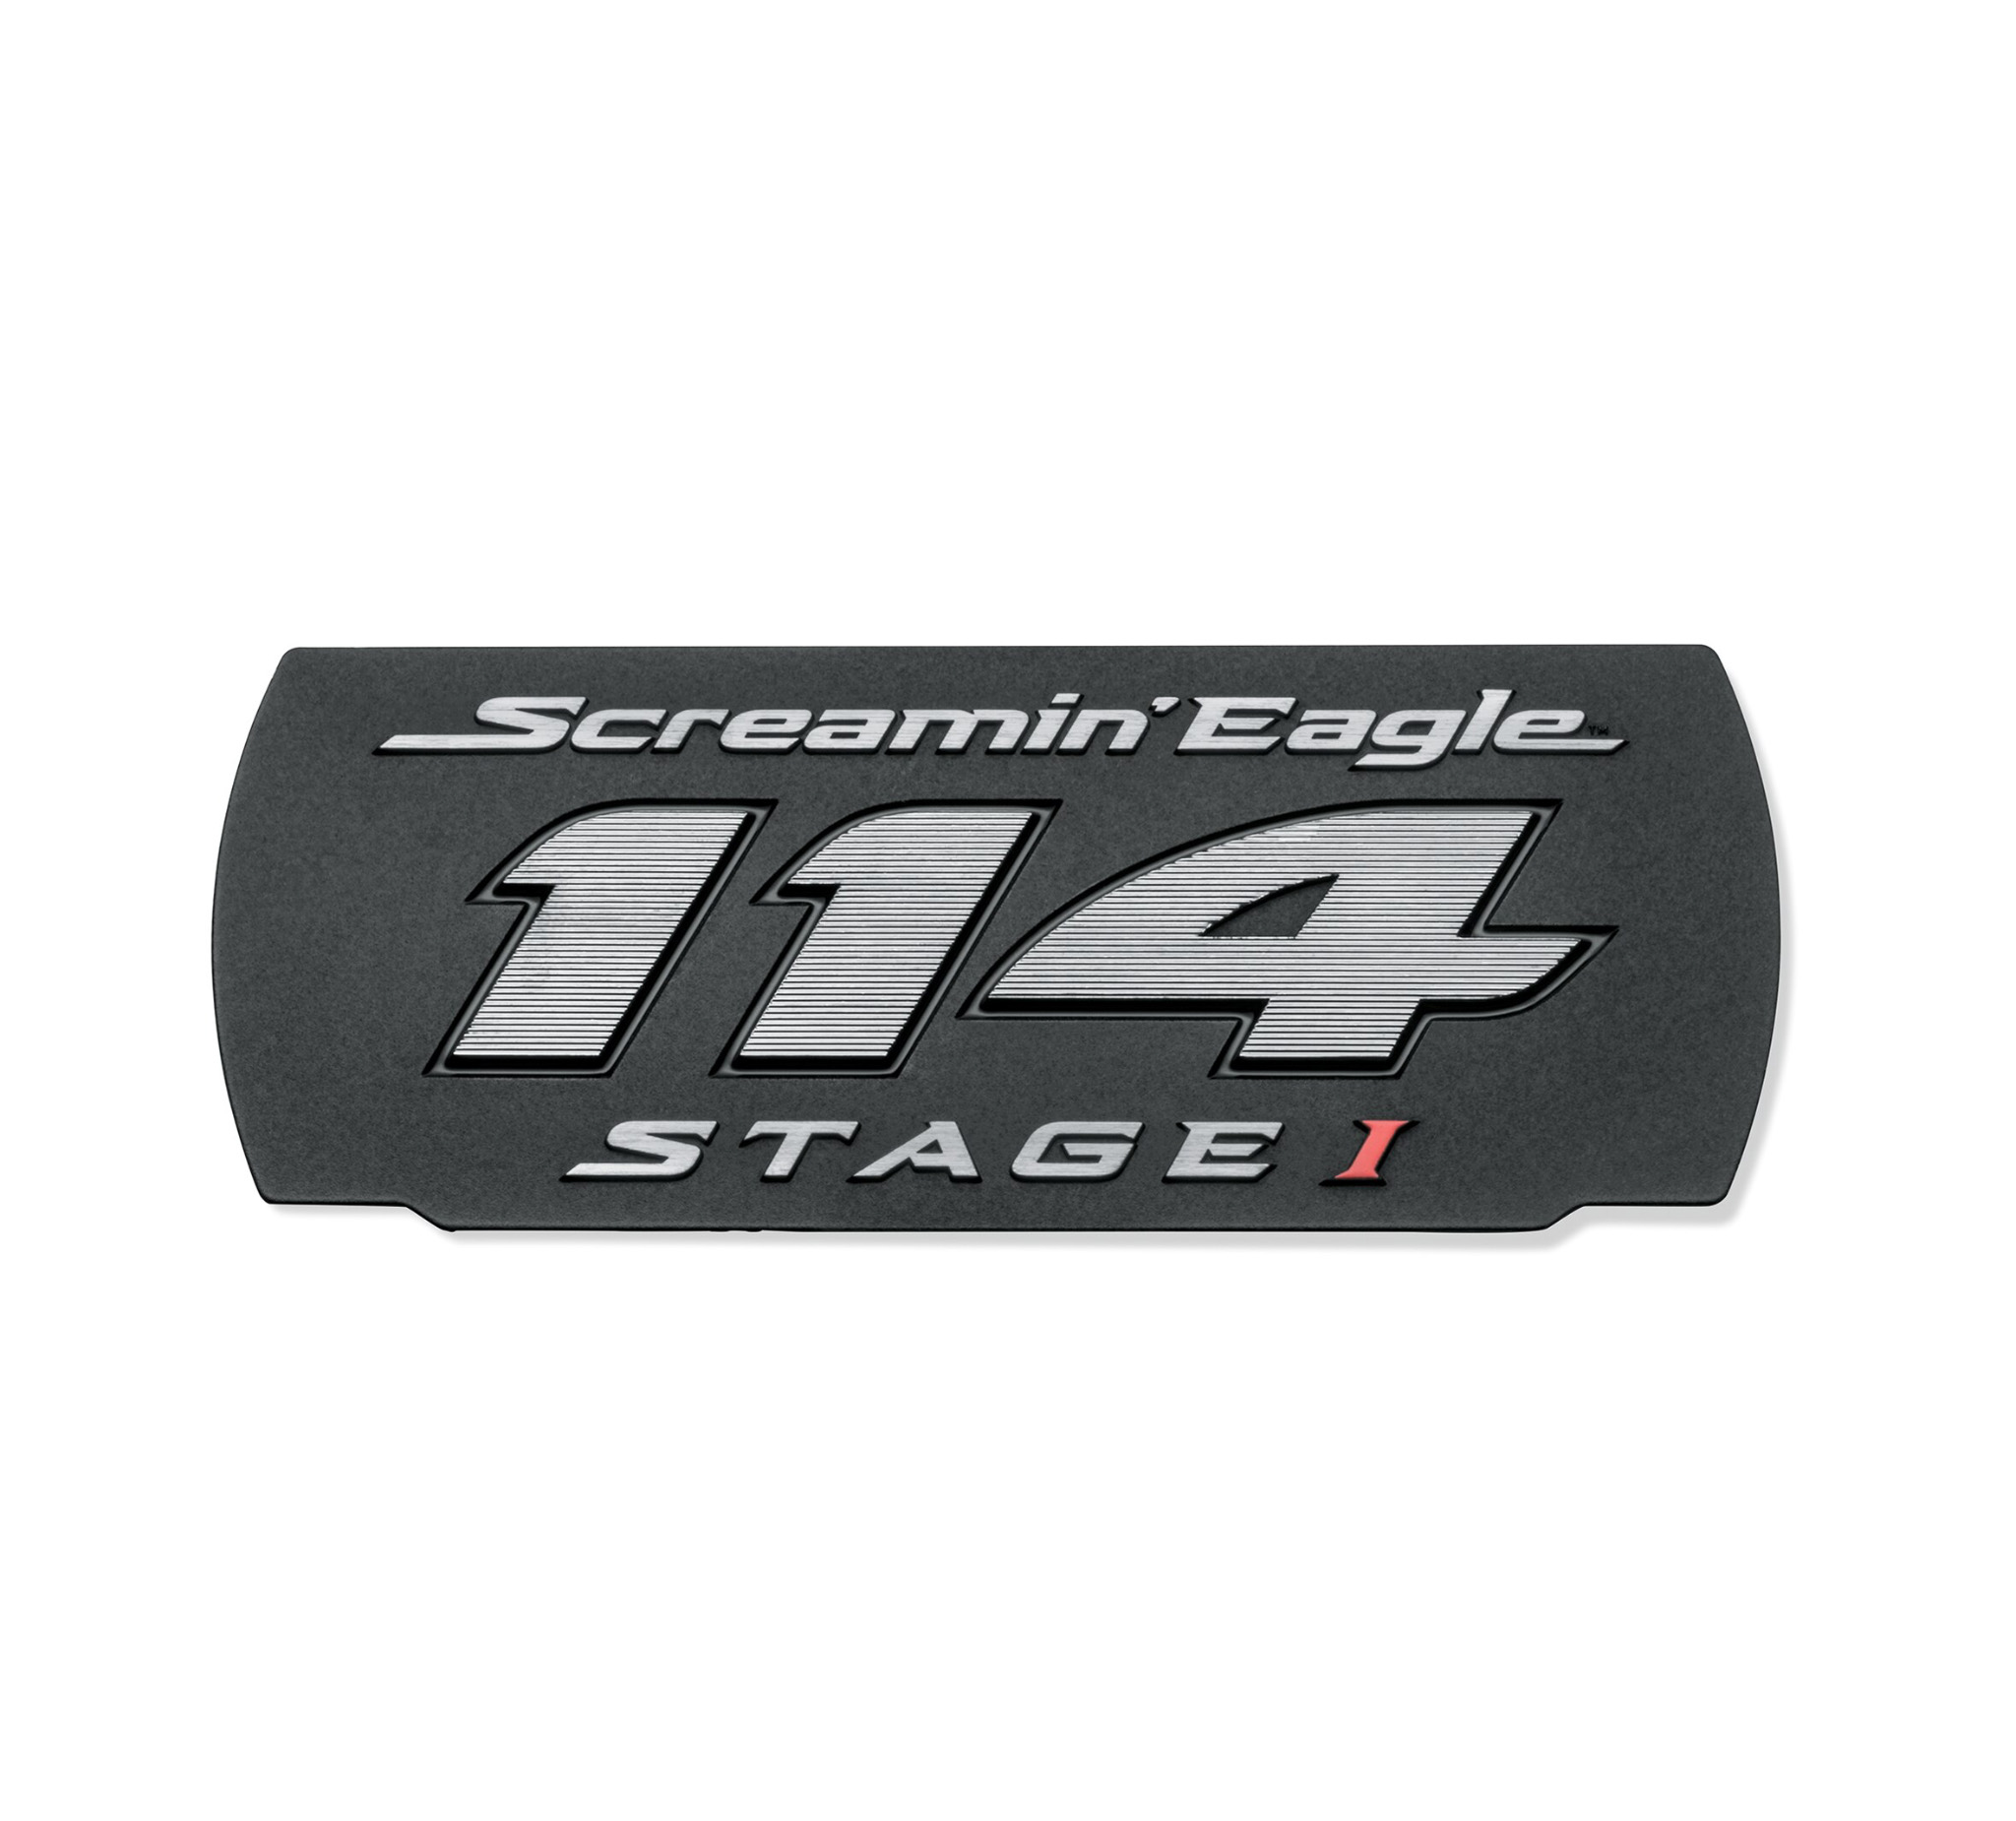 Screamin Eagle 114 Stage I Insert 25600132 Harley Davidson Indonesia